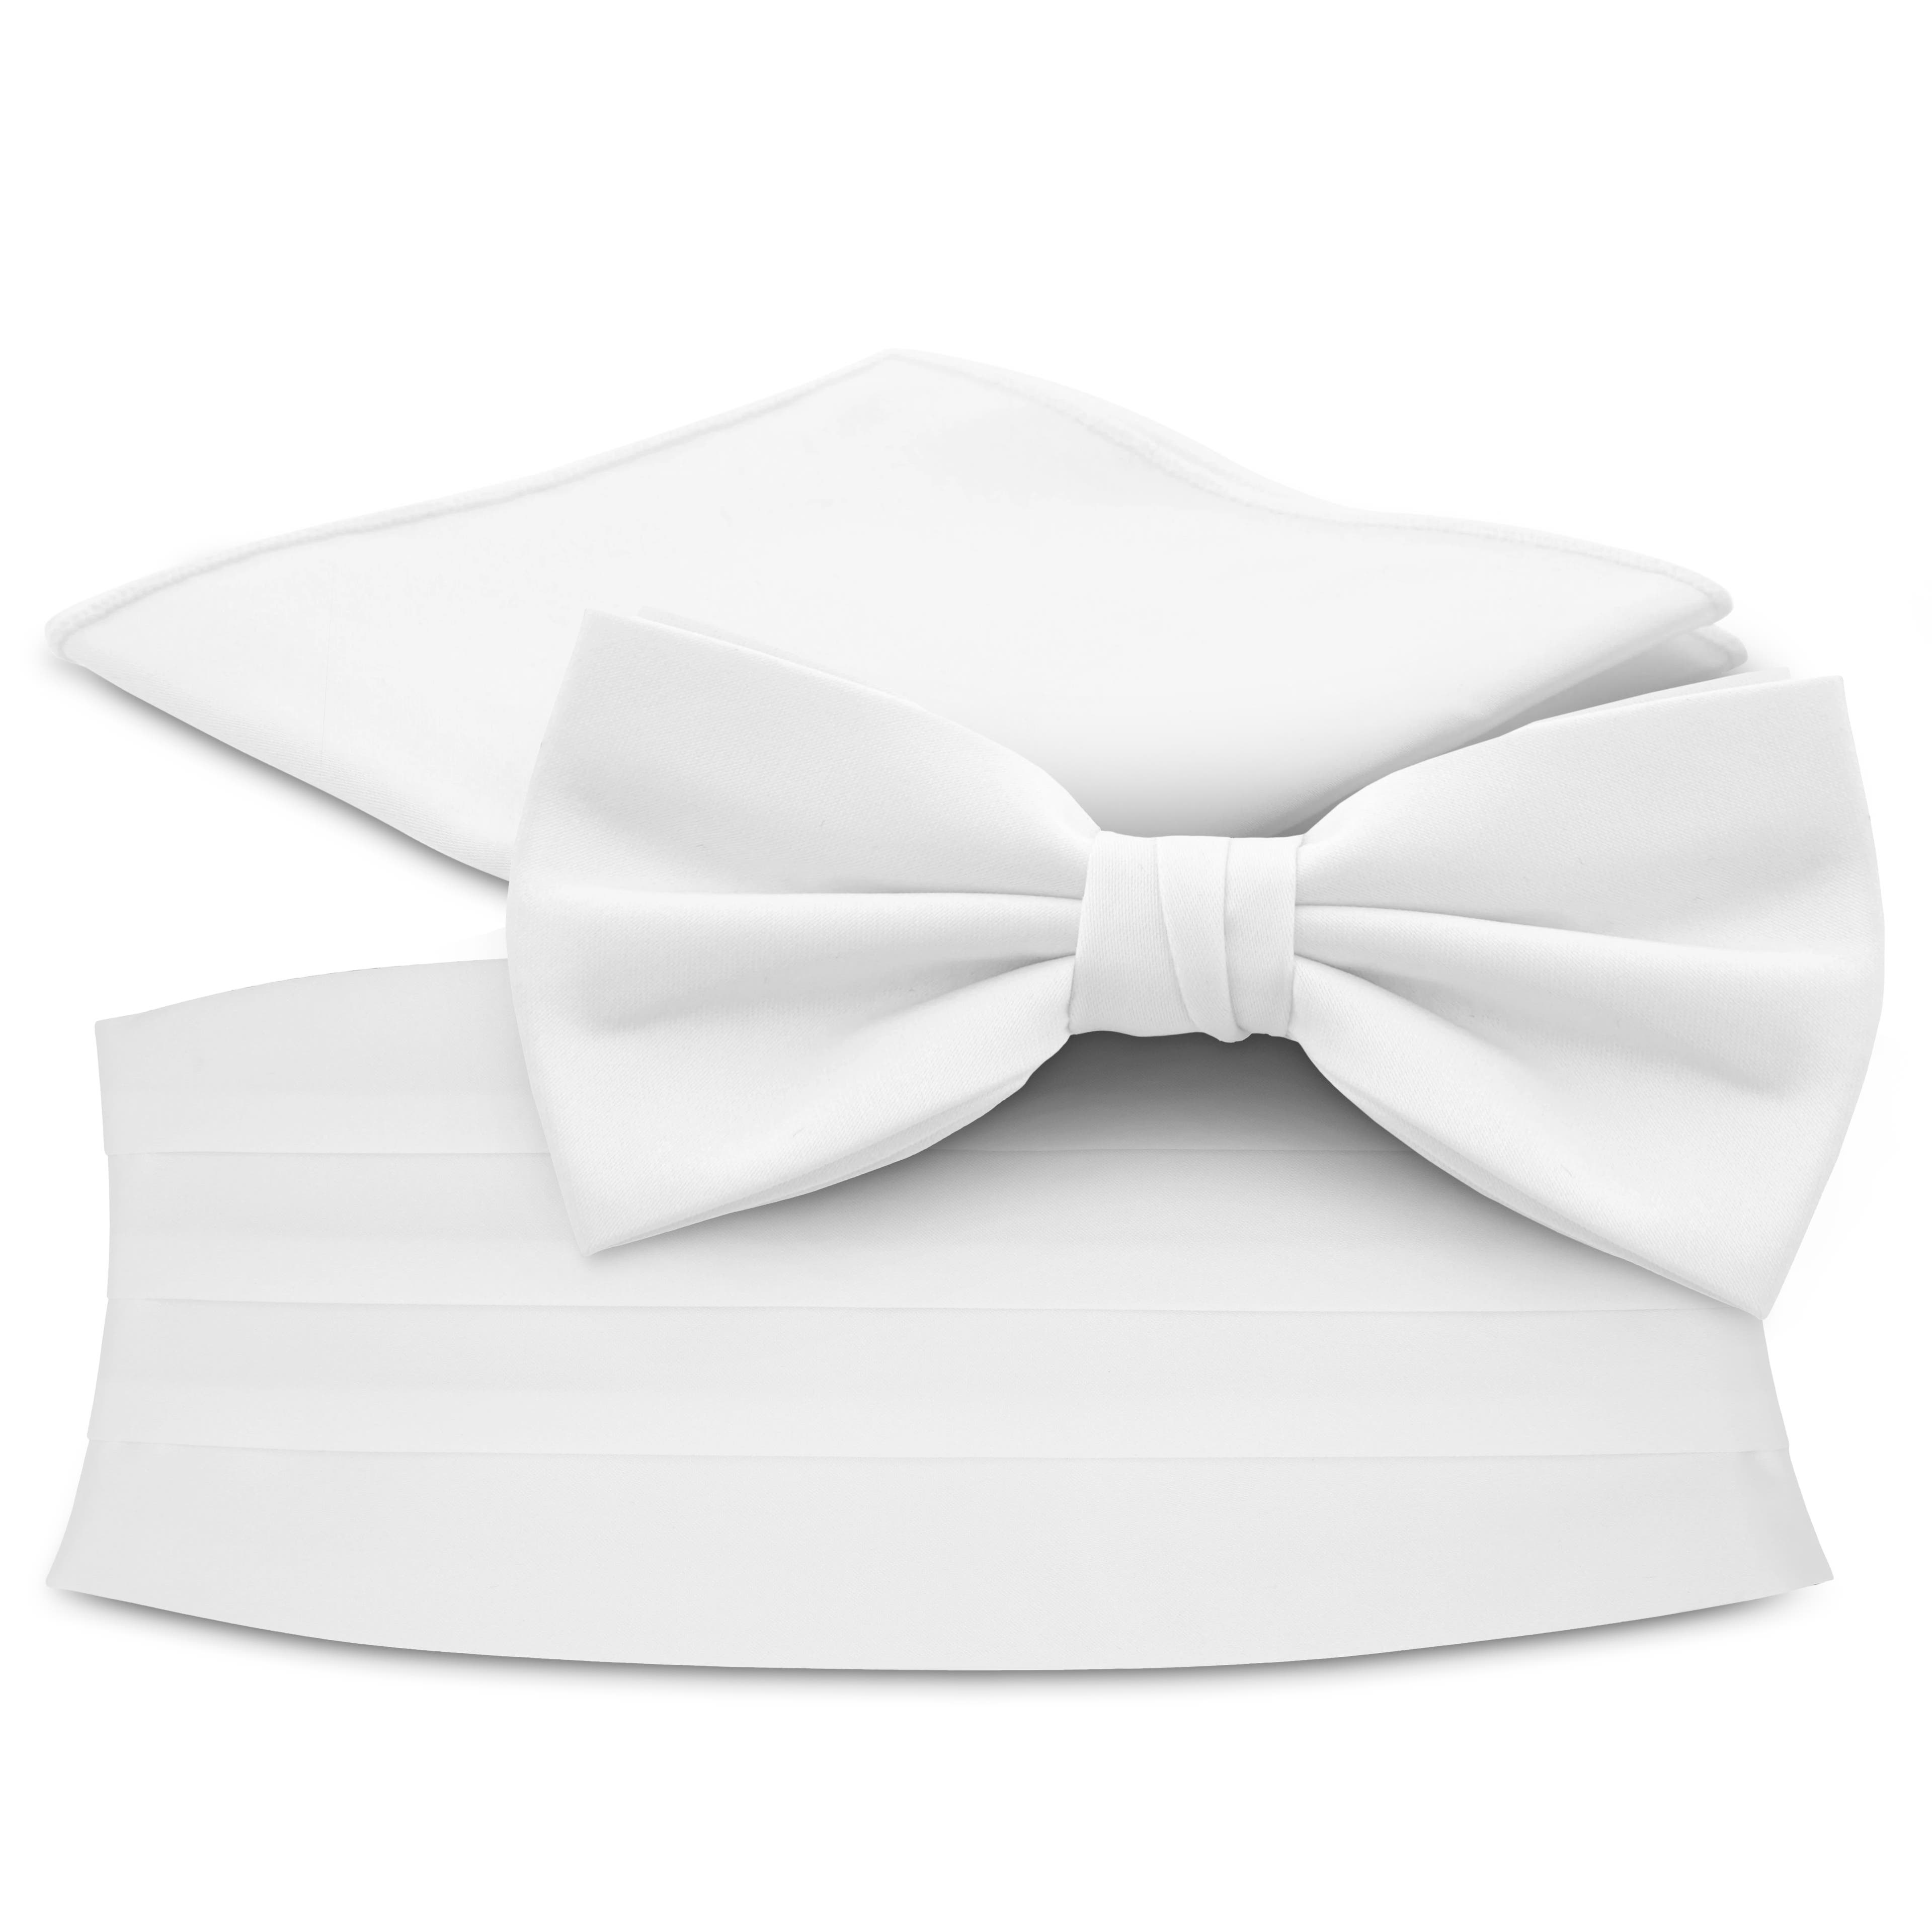 White Pre-Tied Bow Tie, Pocket Square, and Cummerbund Set